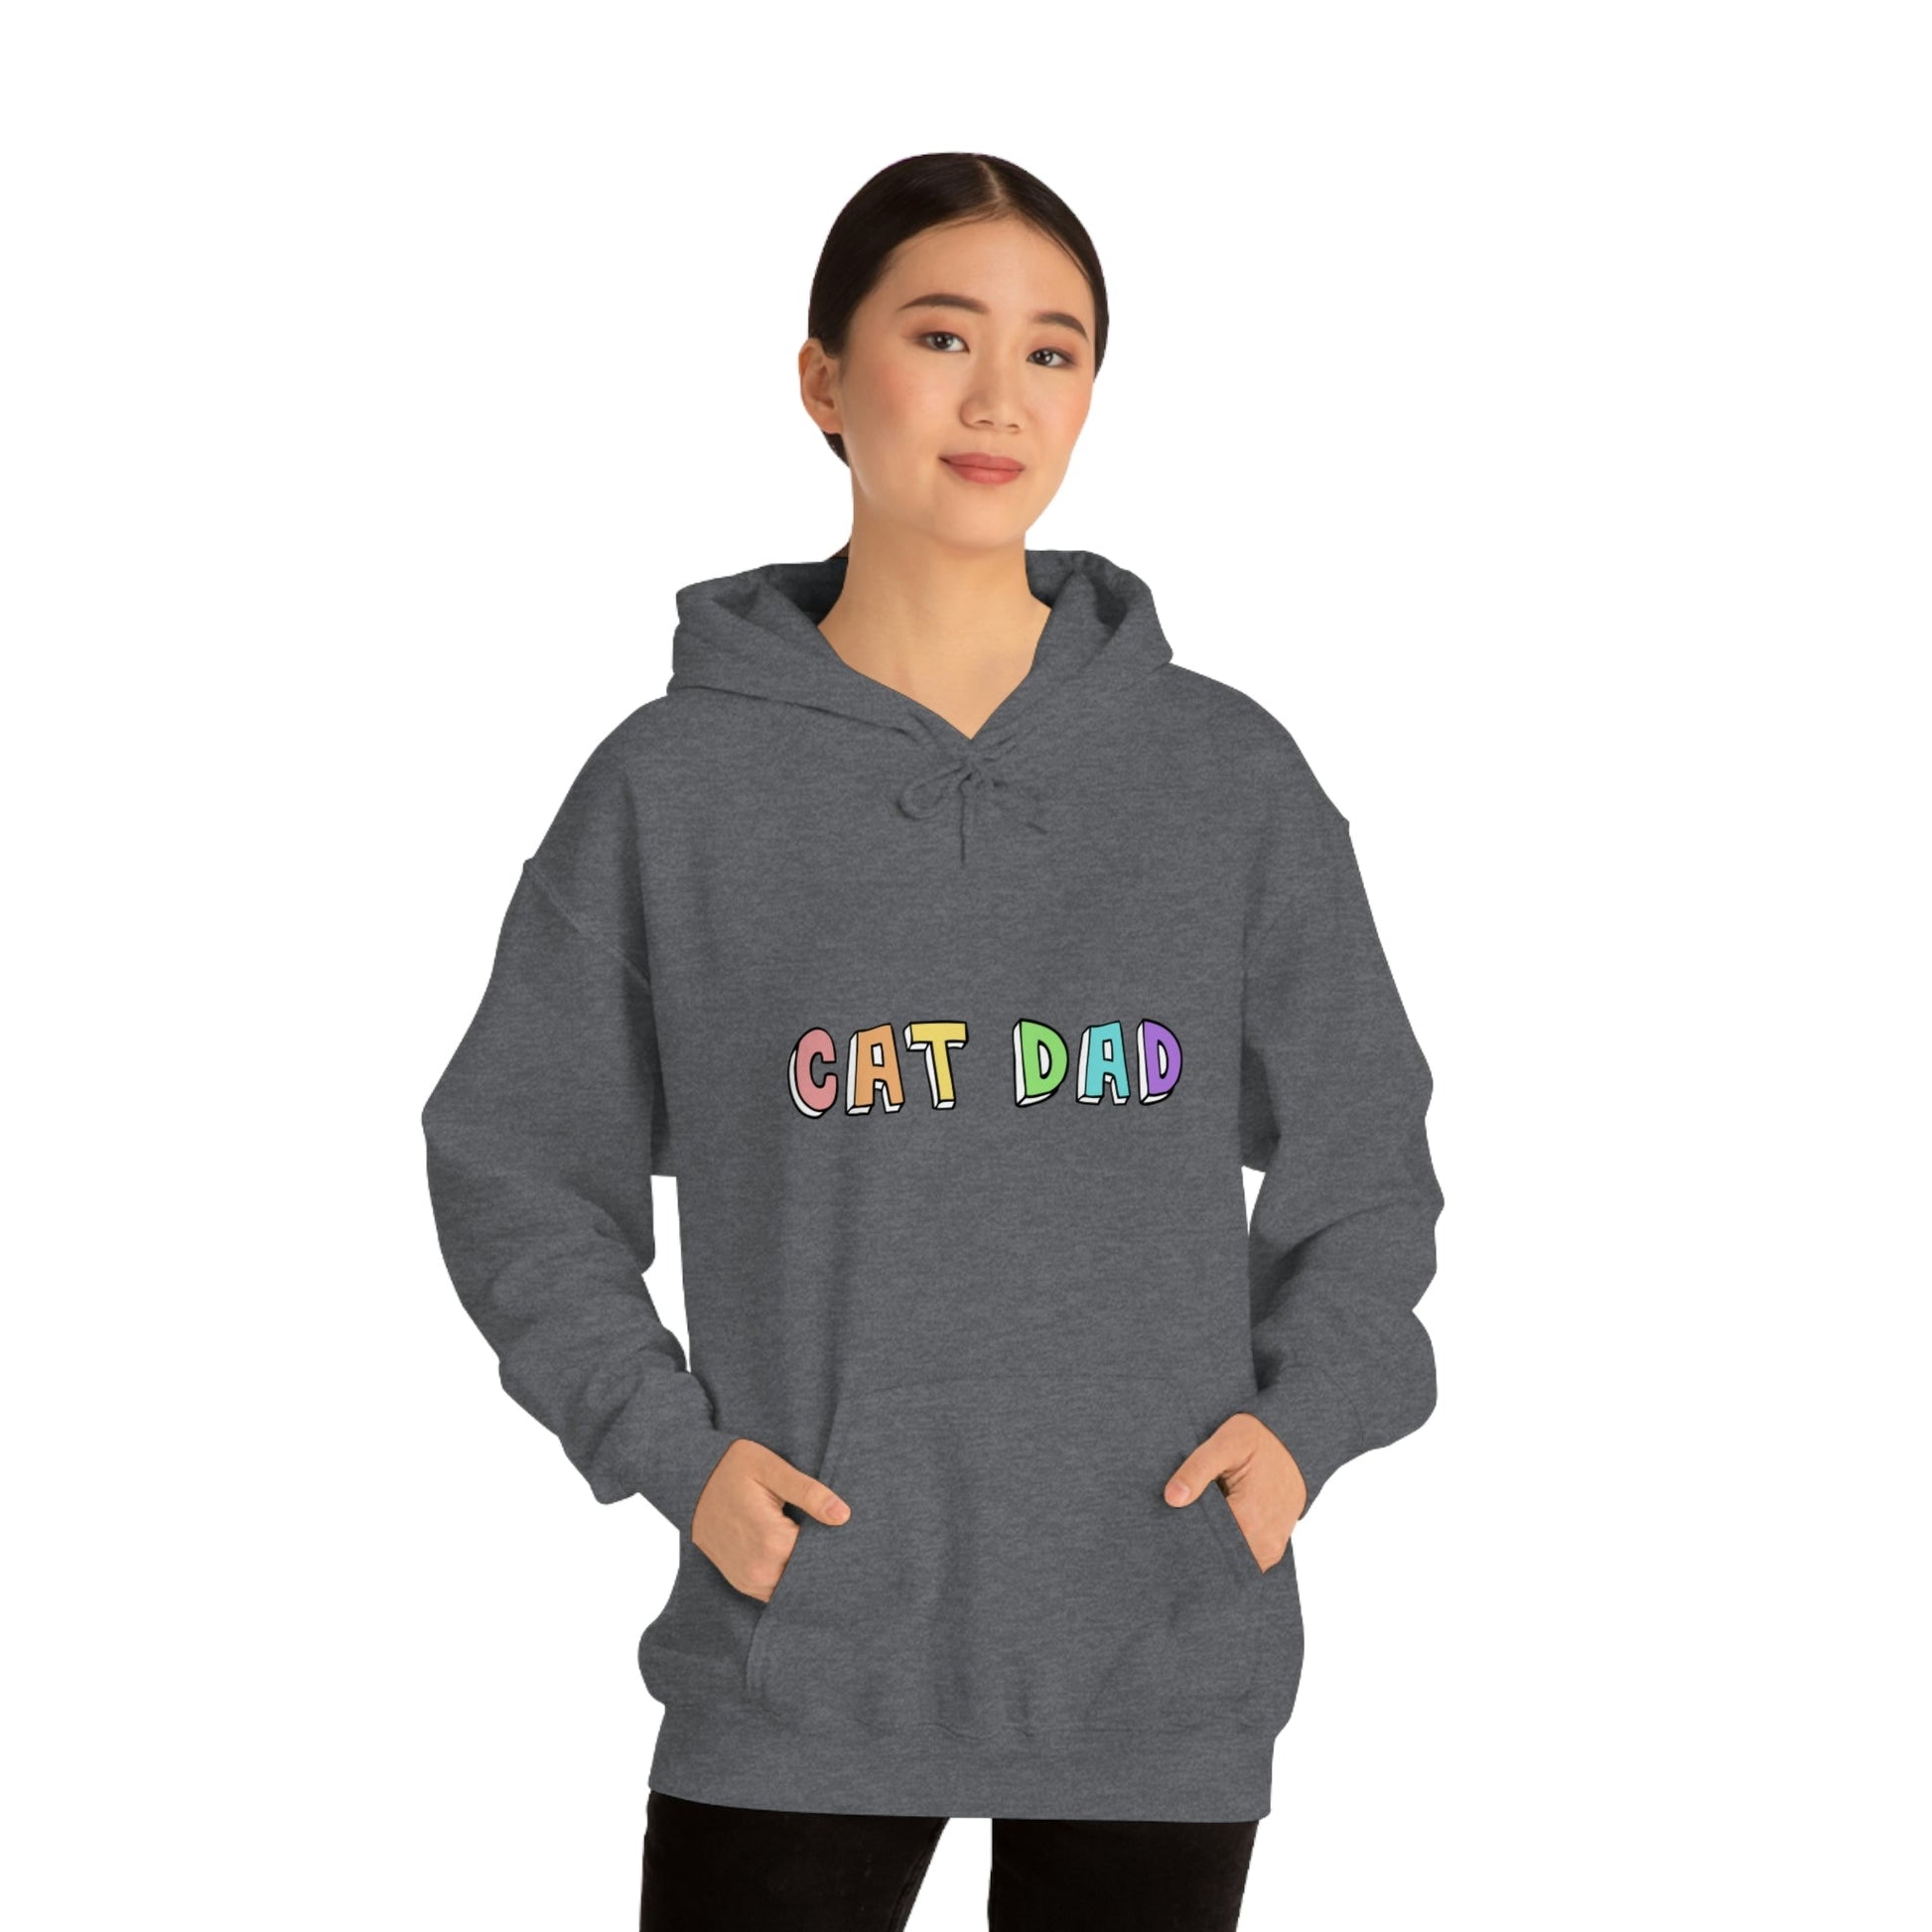 Cat Dad | Hooded Sweatshirt - Detezi Designs-14625796422078322205